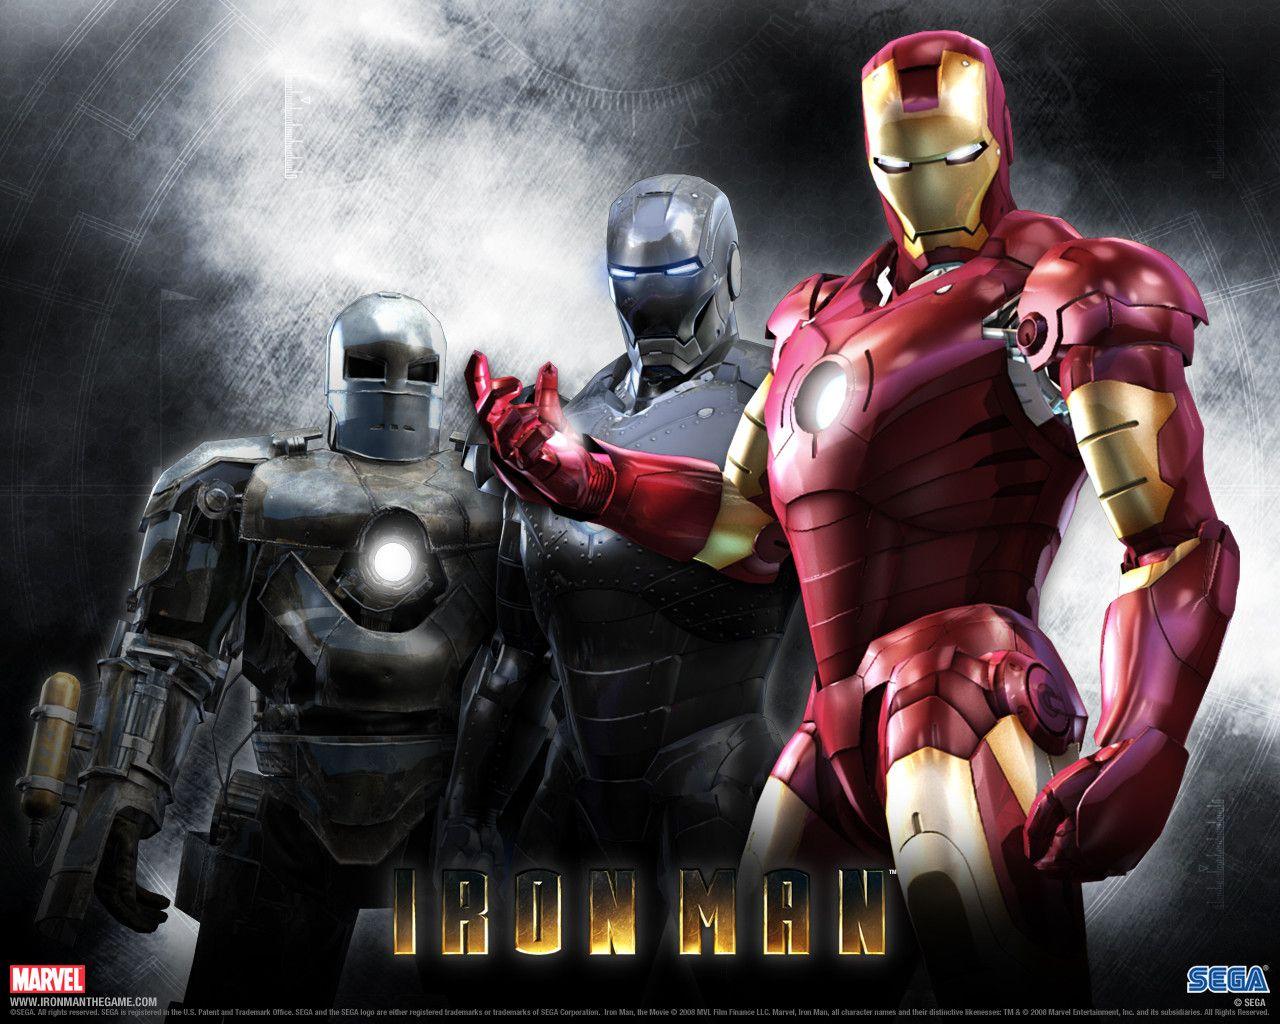 Iron Man 1 Wallpaper